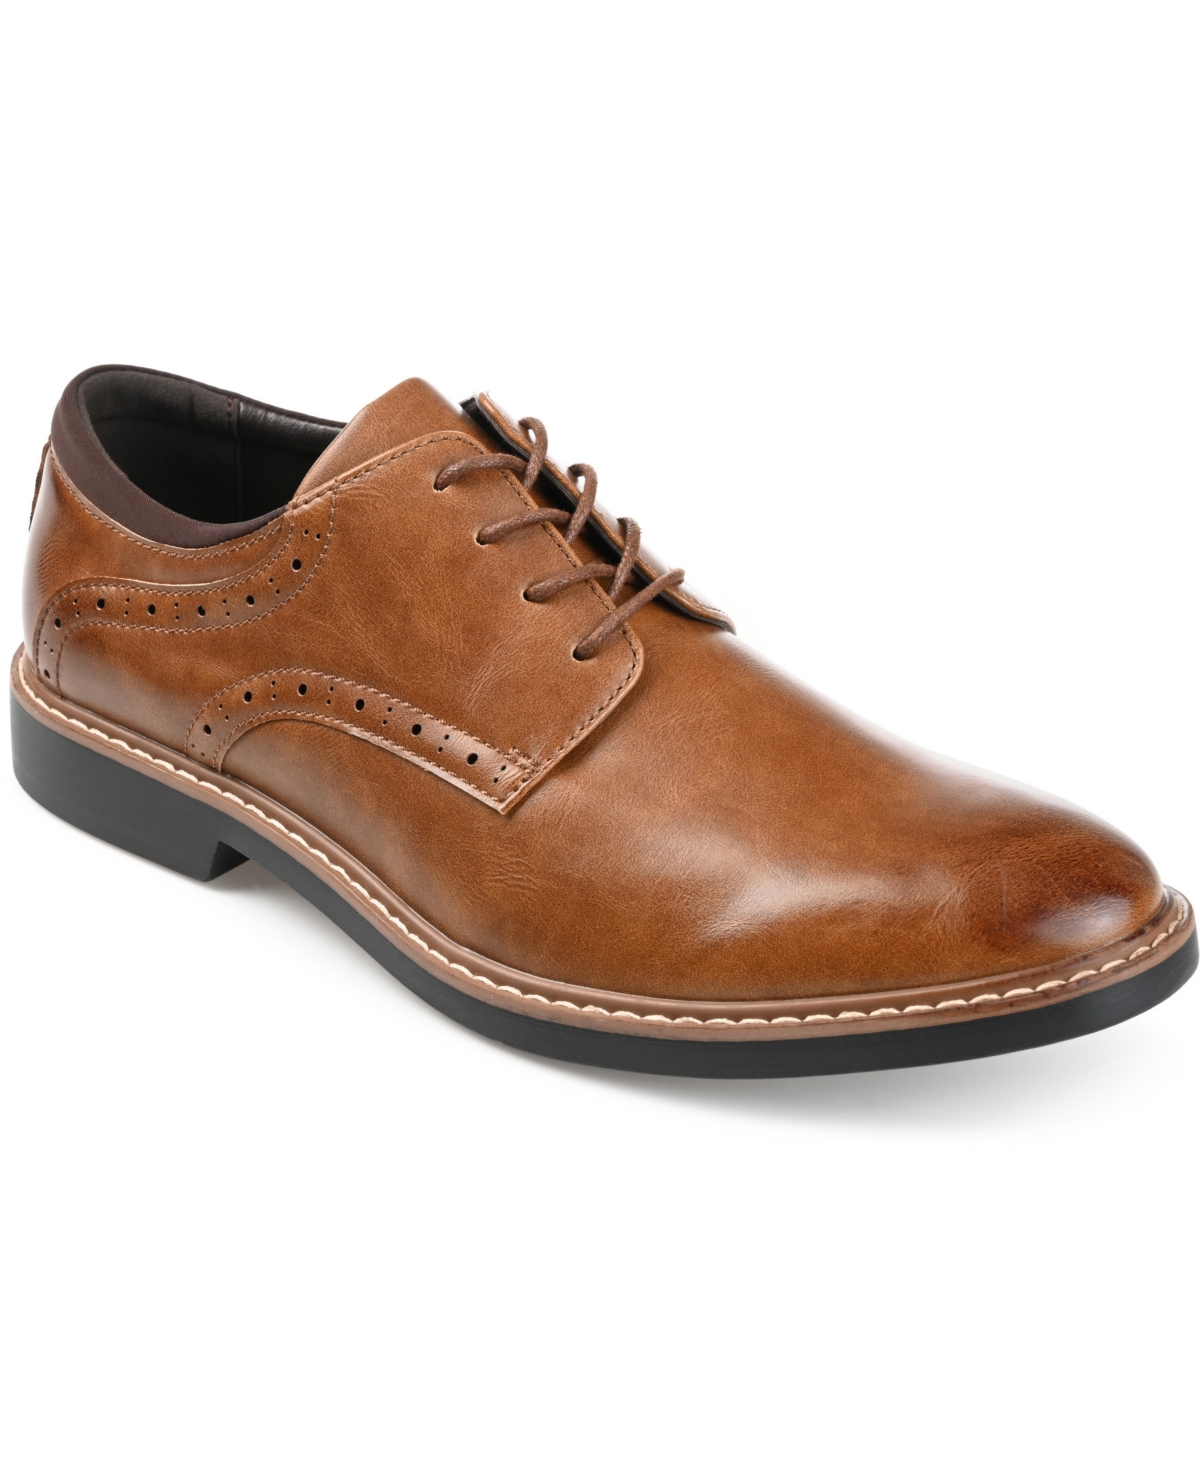 Men's Irwin Brogue Dress Shoes - Brown